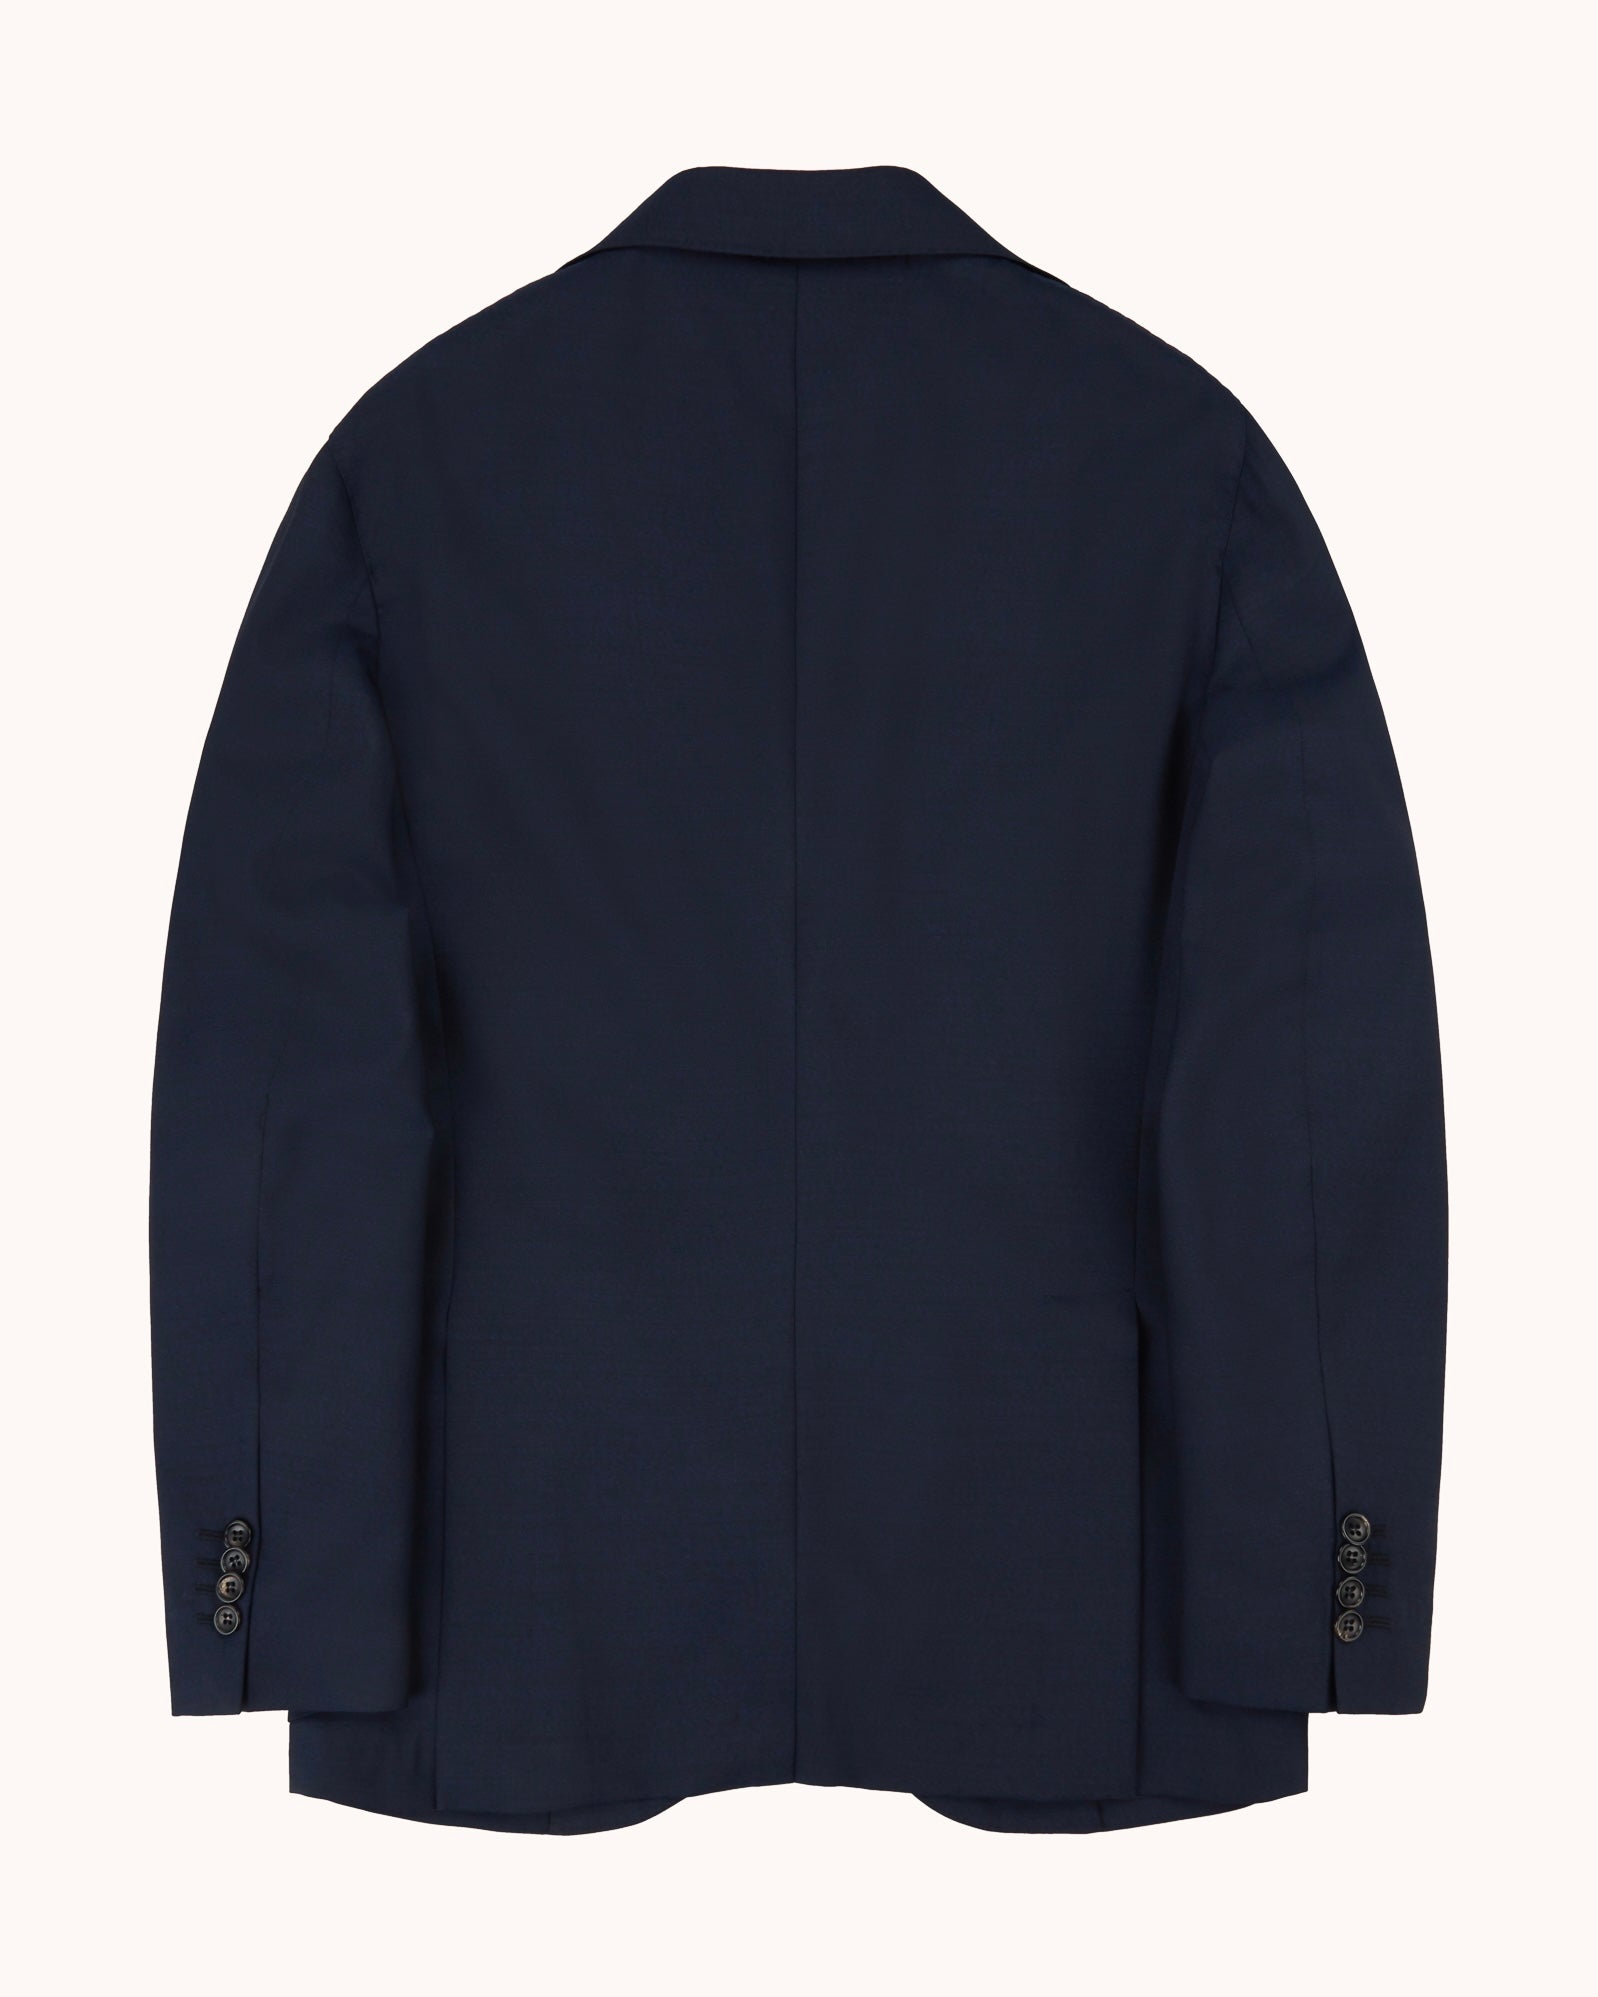 Sport Jacket - Navy High Twist Wool